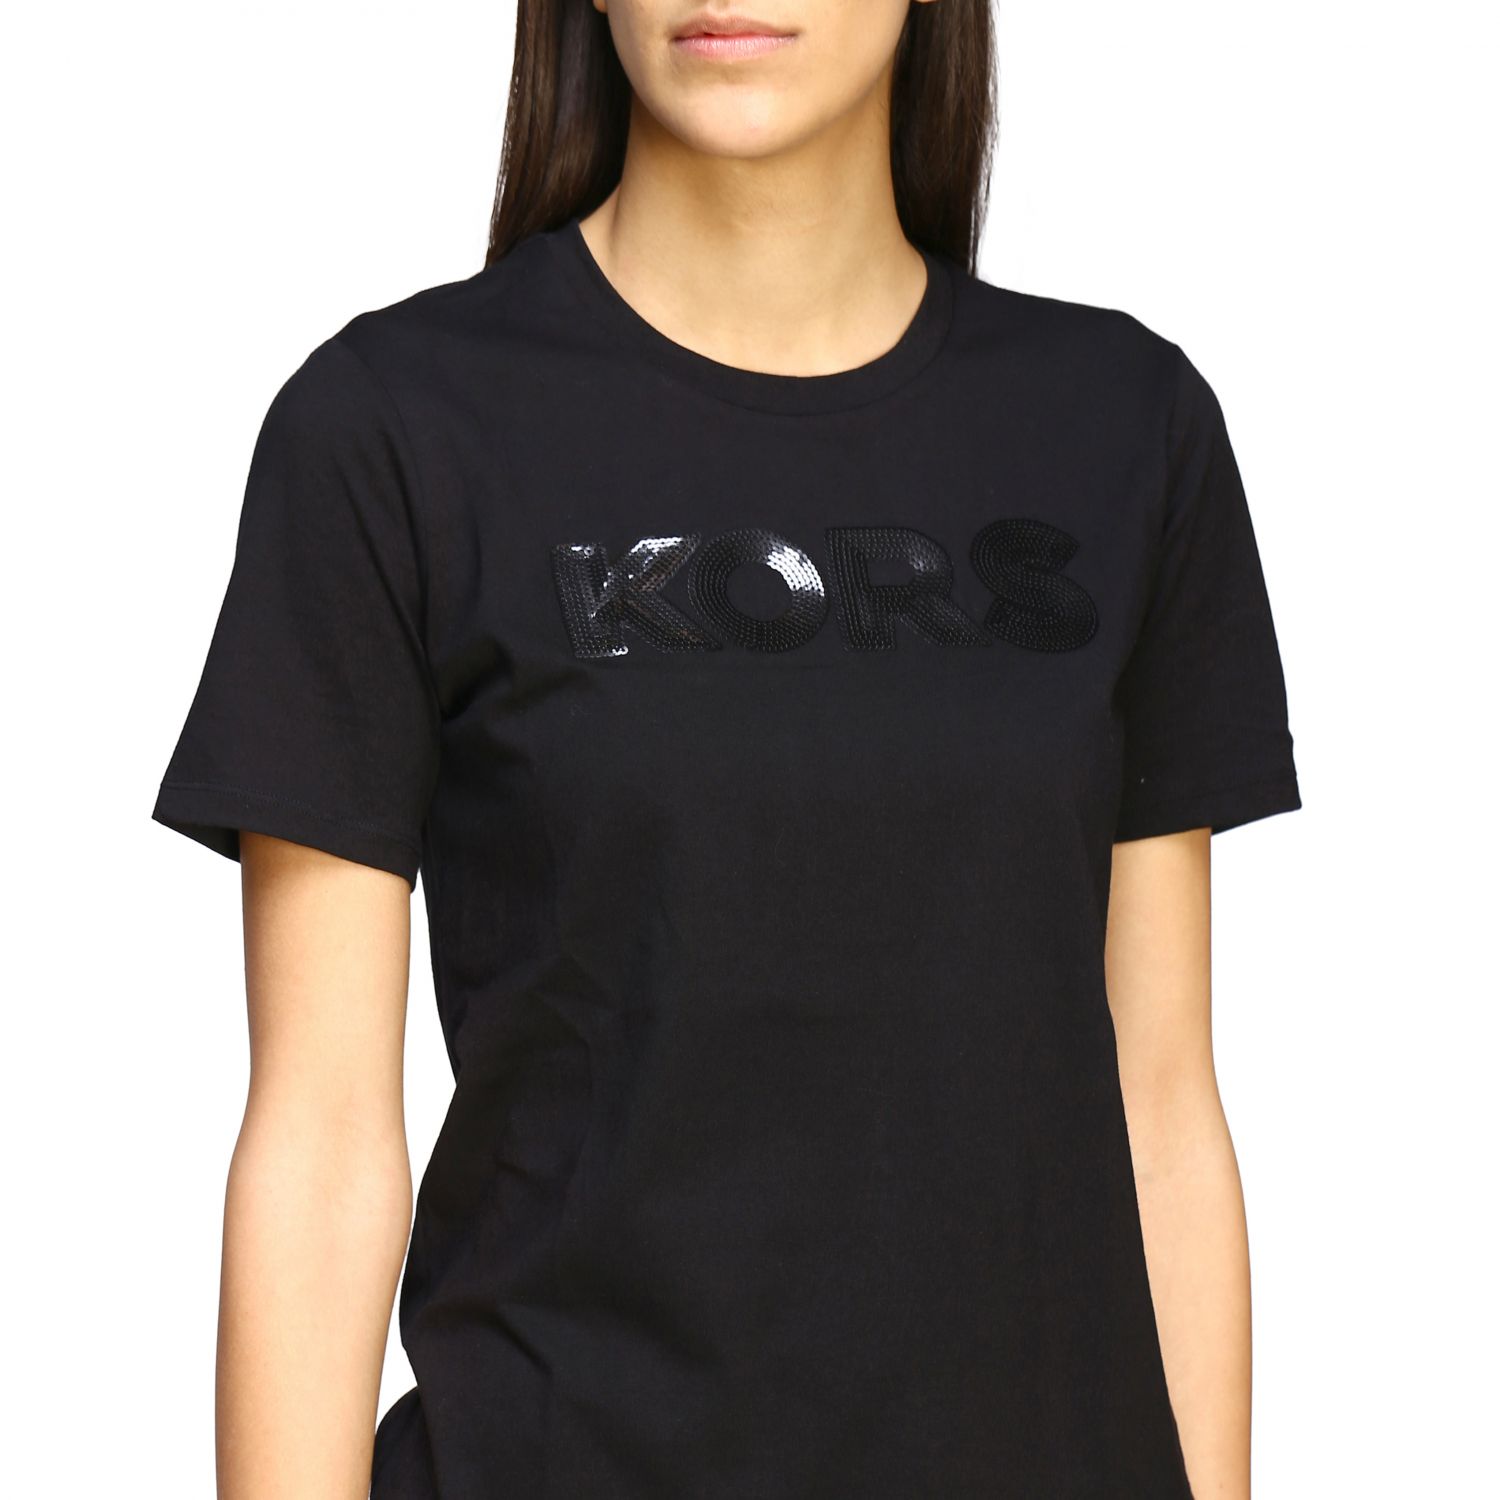 Michael Kors T Shirt Logo Hotsell, 50% OFF | www.ingeniovirtual.com